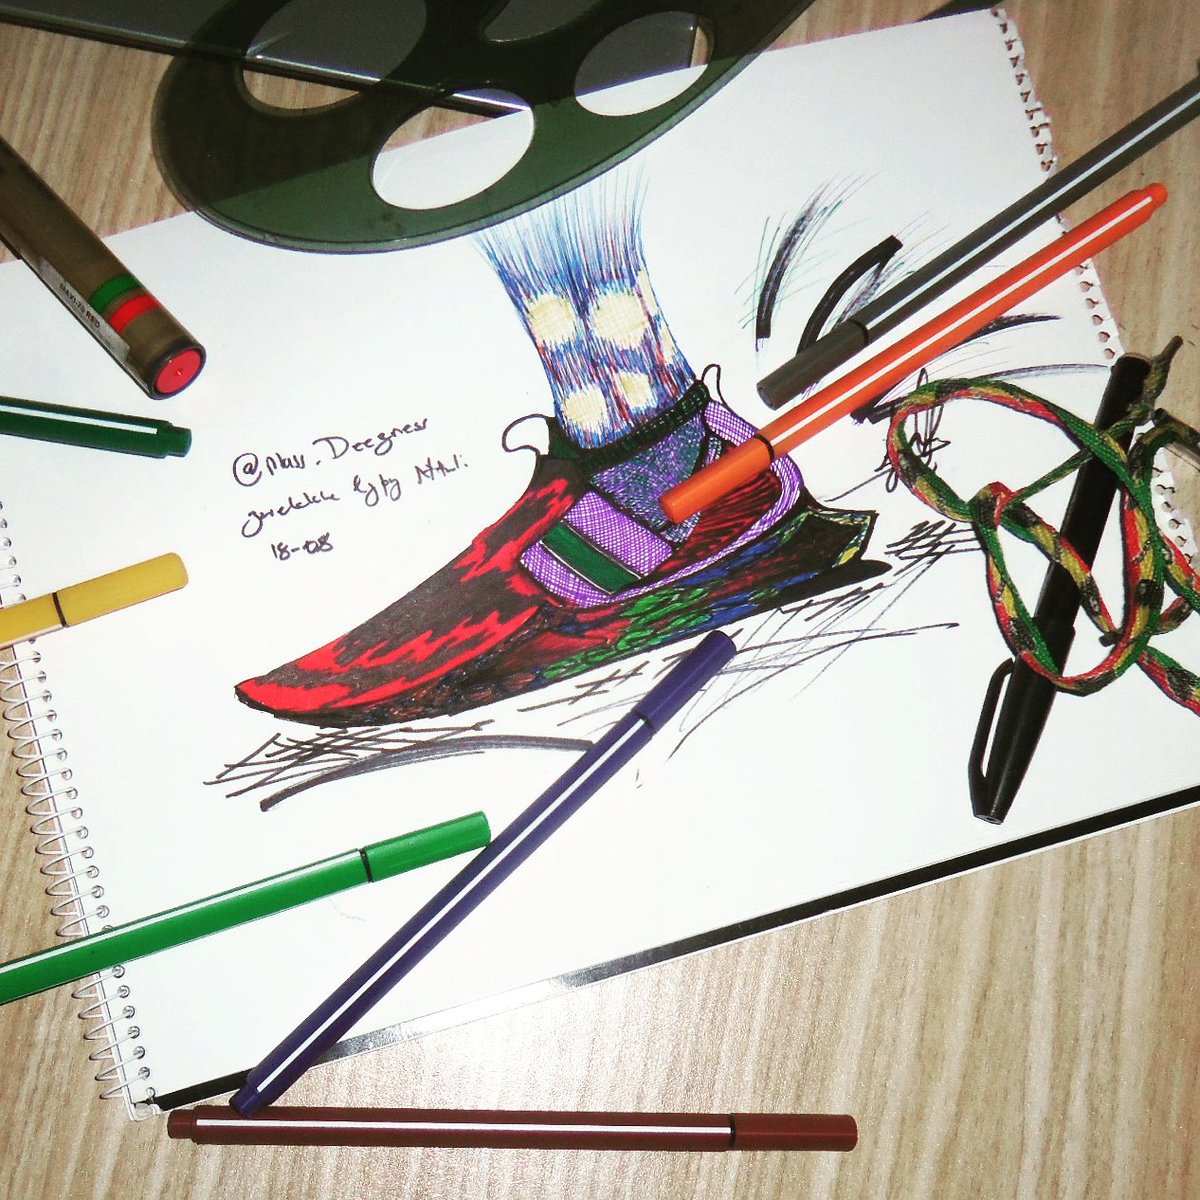 Rose Bed 
#aboutsouthafrica #durban #streetware #footwear #footweardesigner #fashion #concept #art